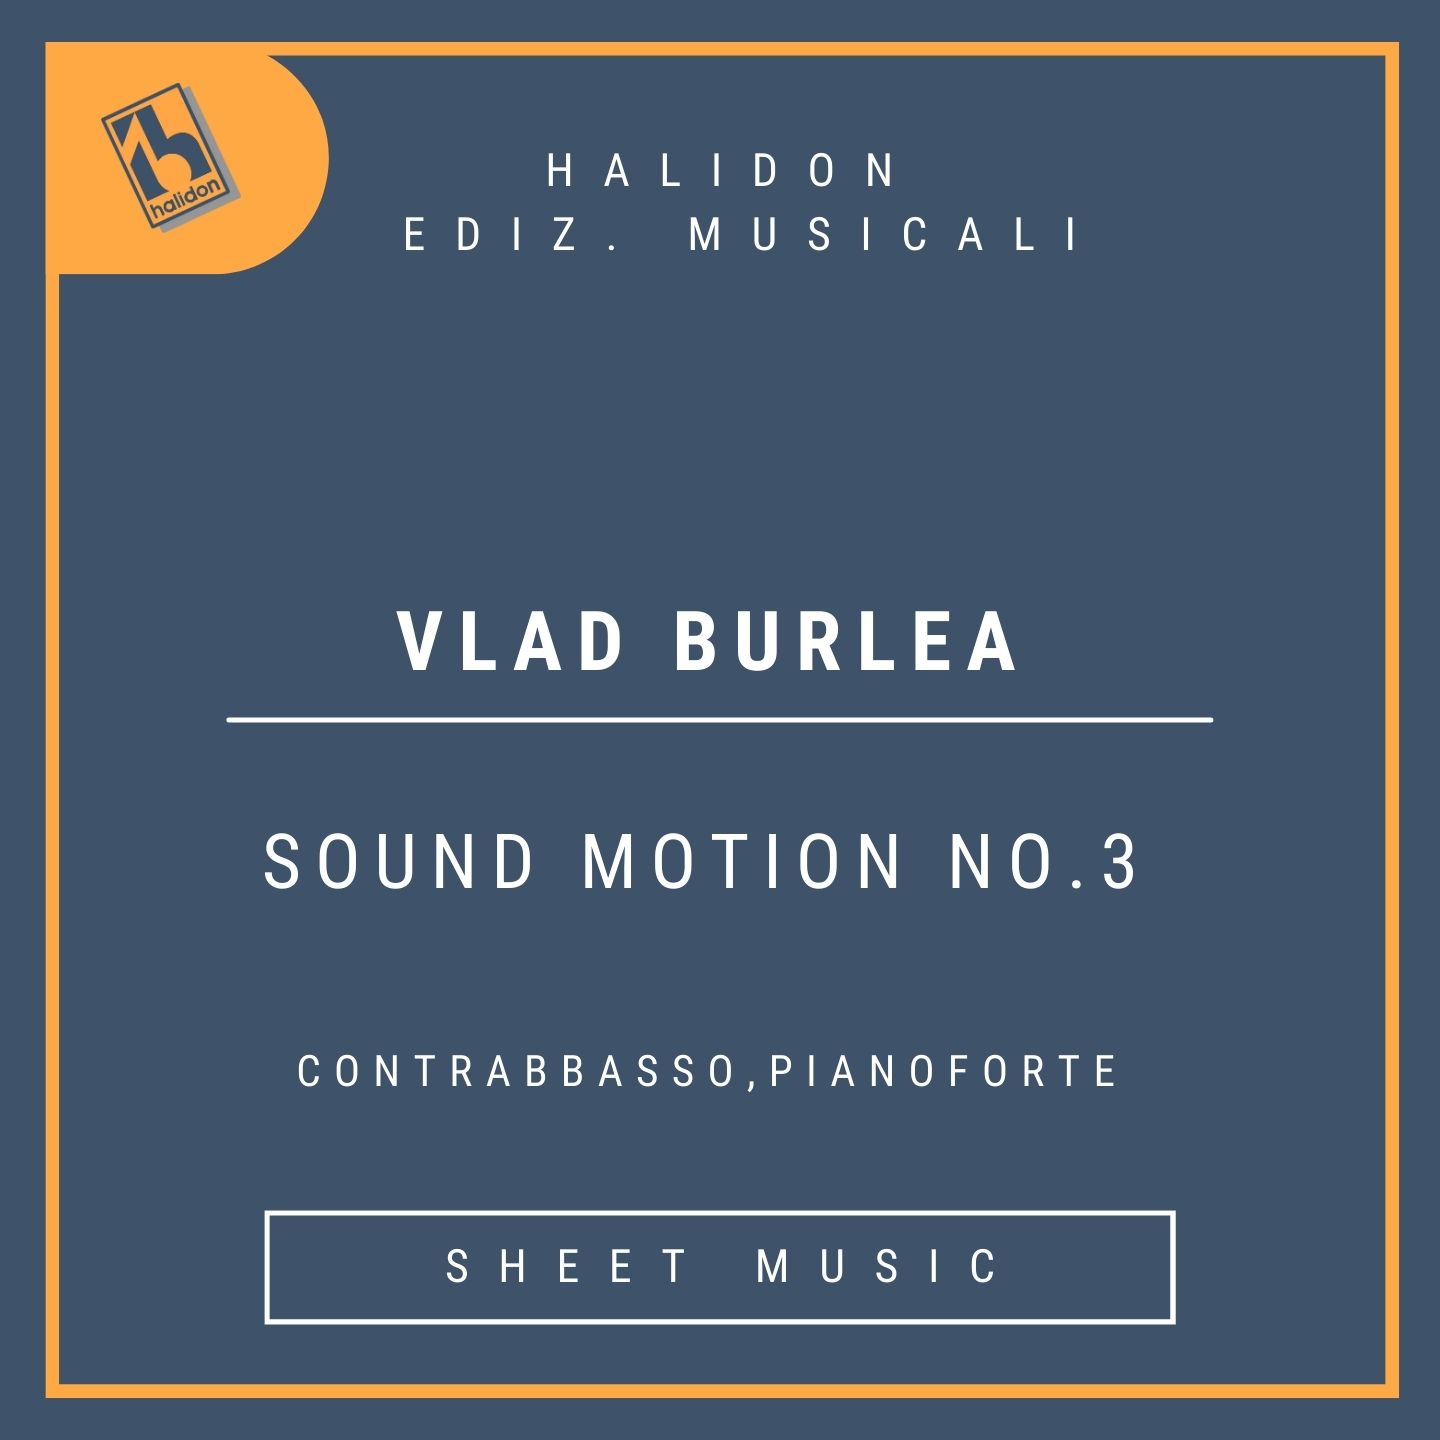 Sound motion No.3